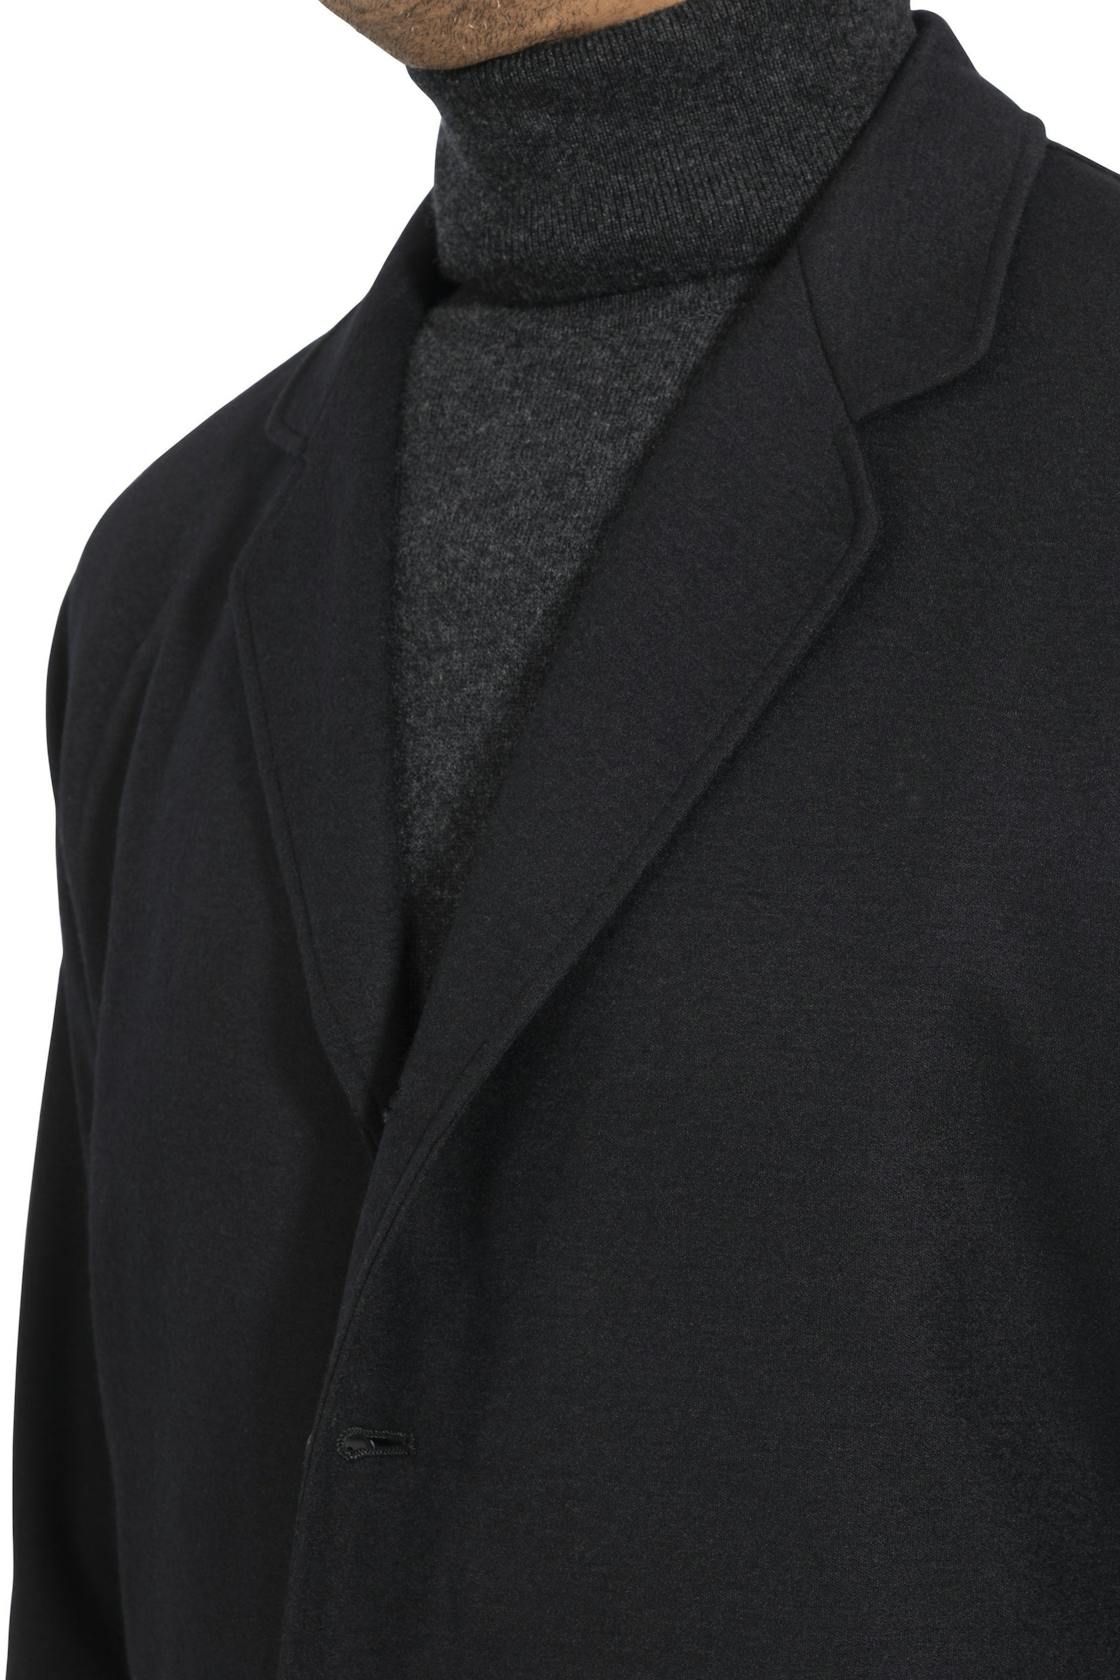 The Armoury Black Wool Arthur's Standard Jacket